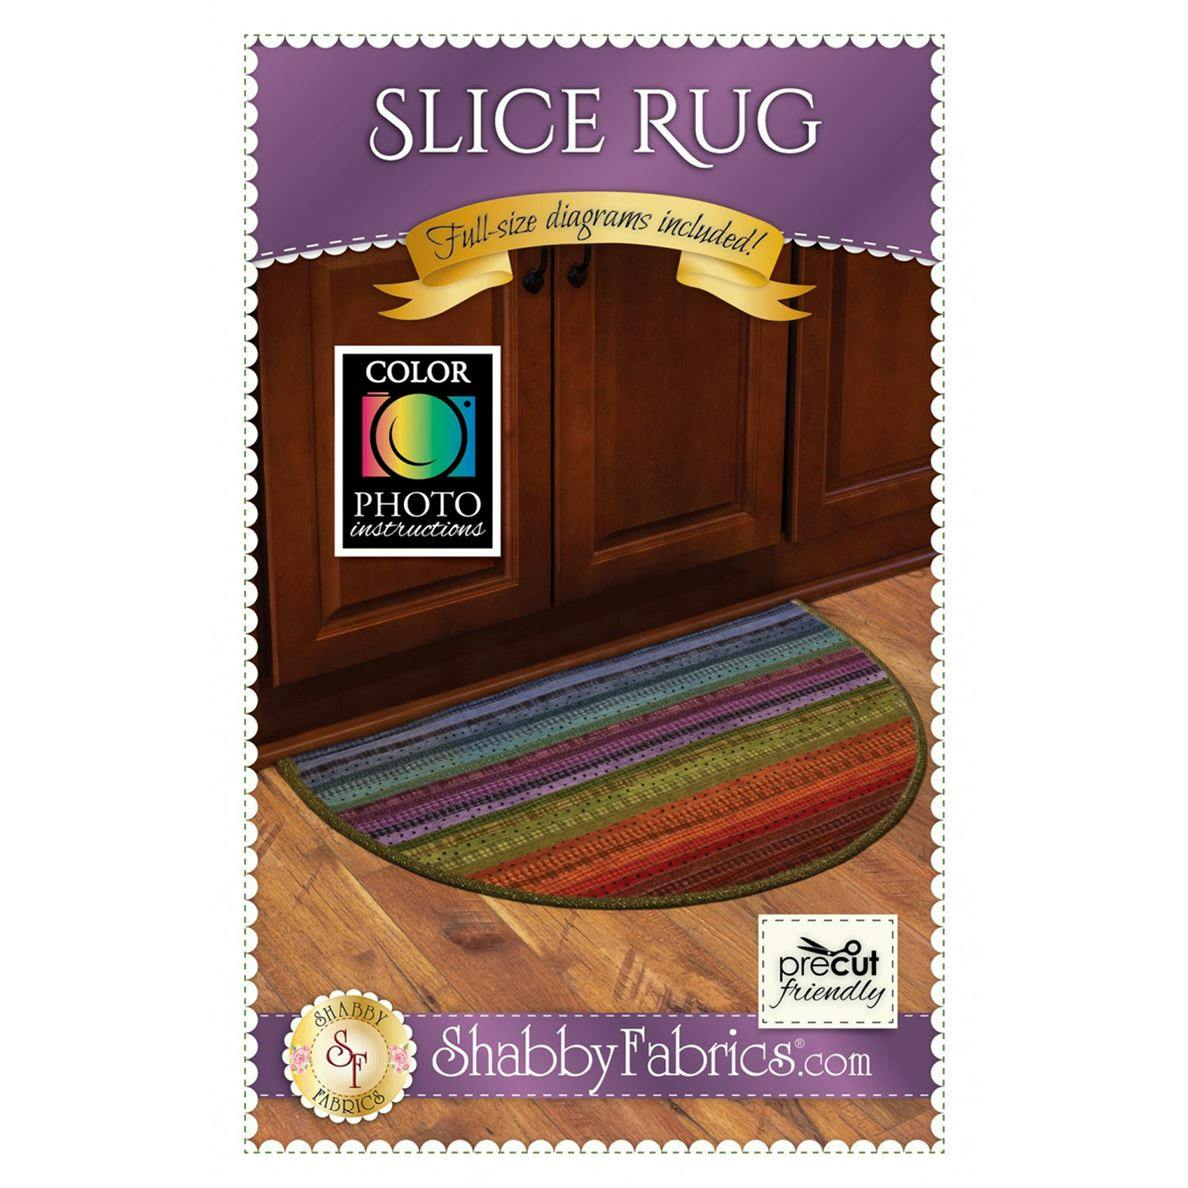 Slice Rug pattern